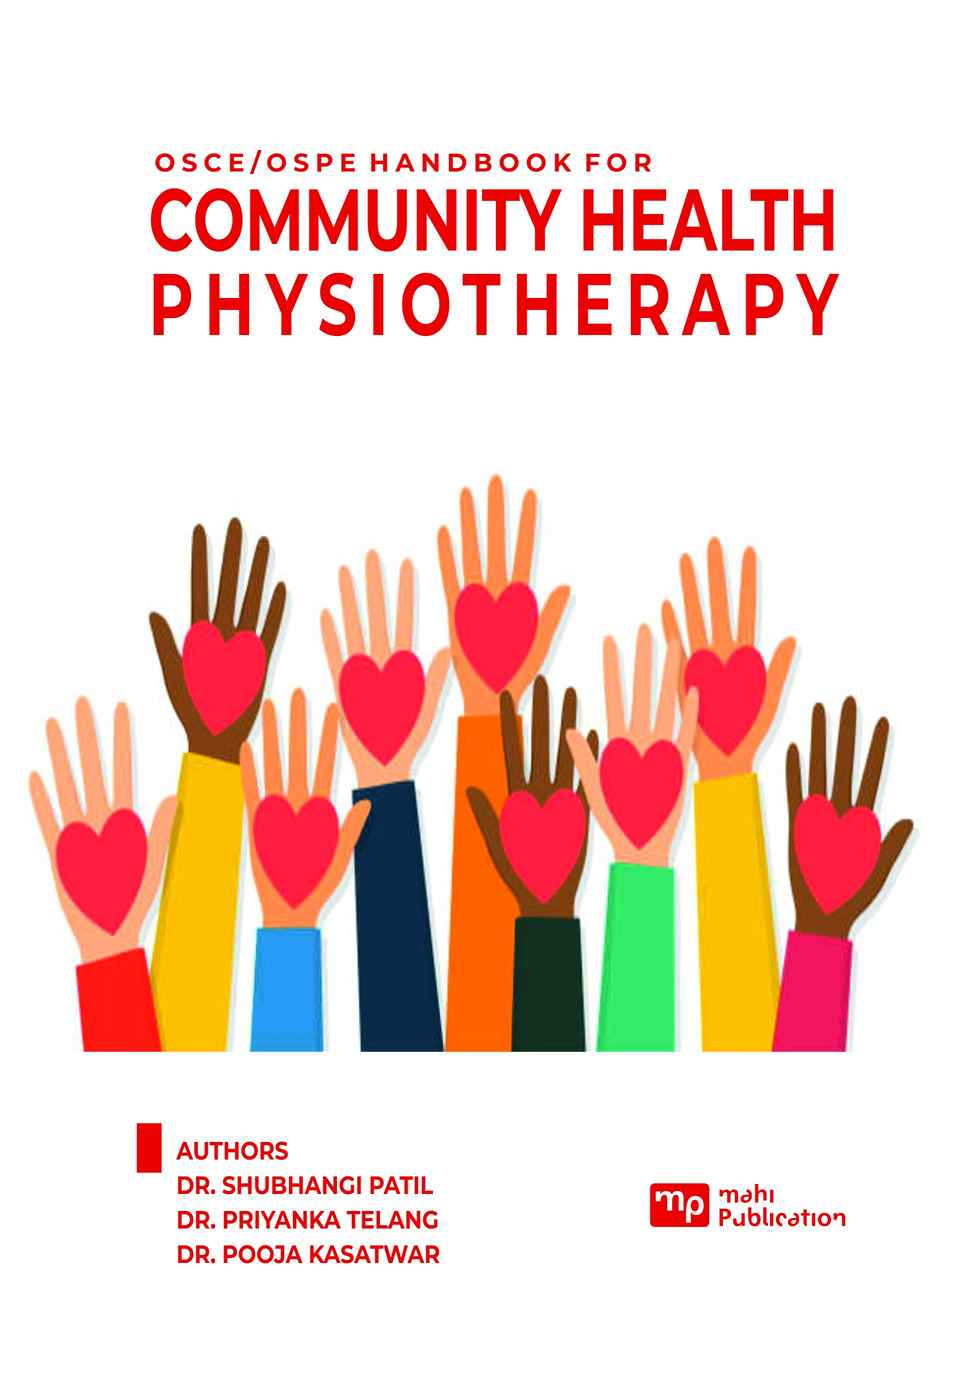 OSCE/OSPE Handbook for Community Health Physiotherapy